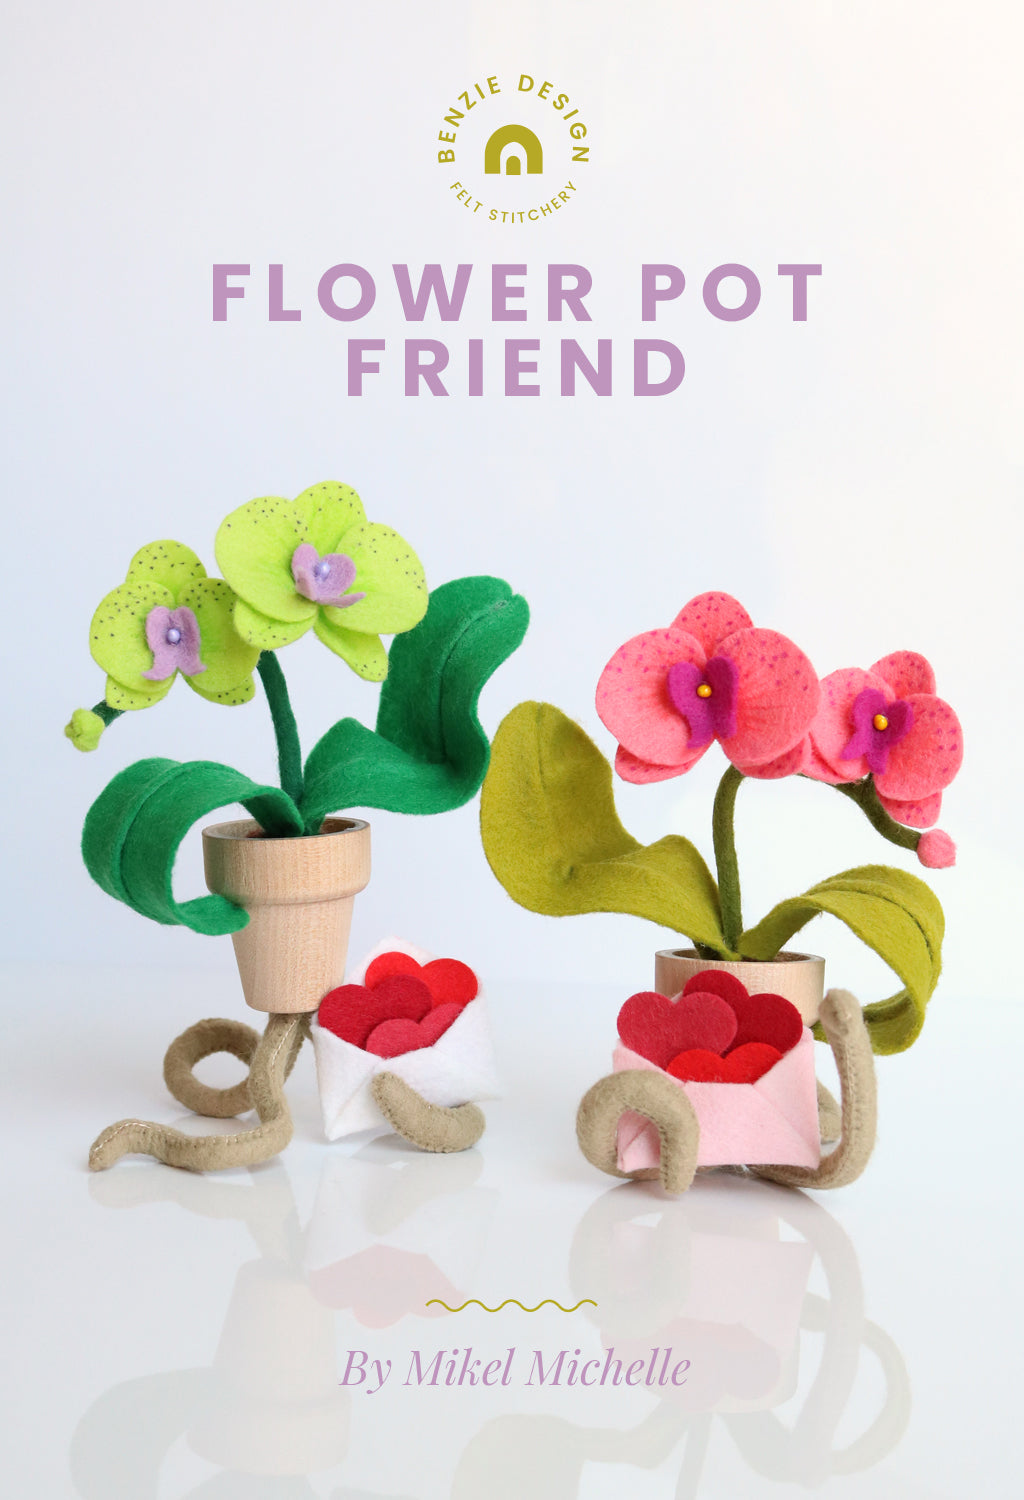 Flower pot friend tutorial